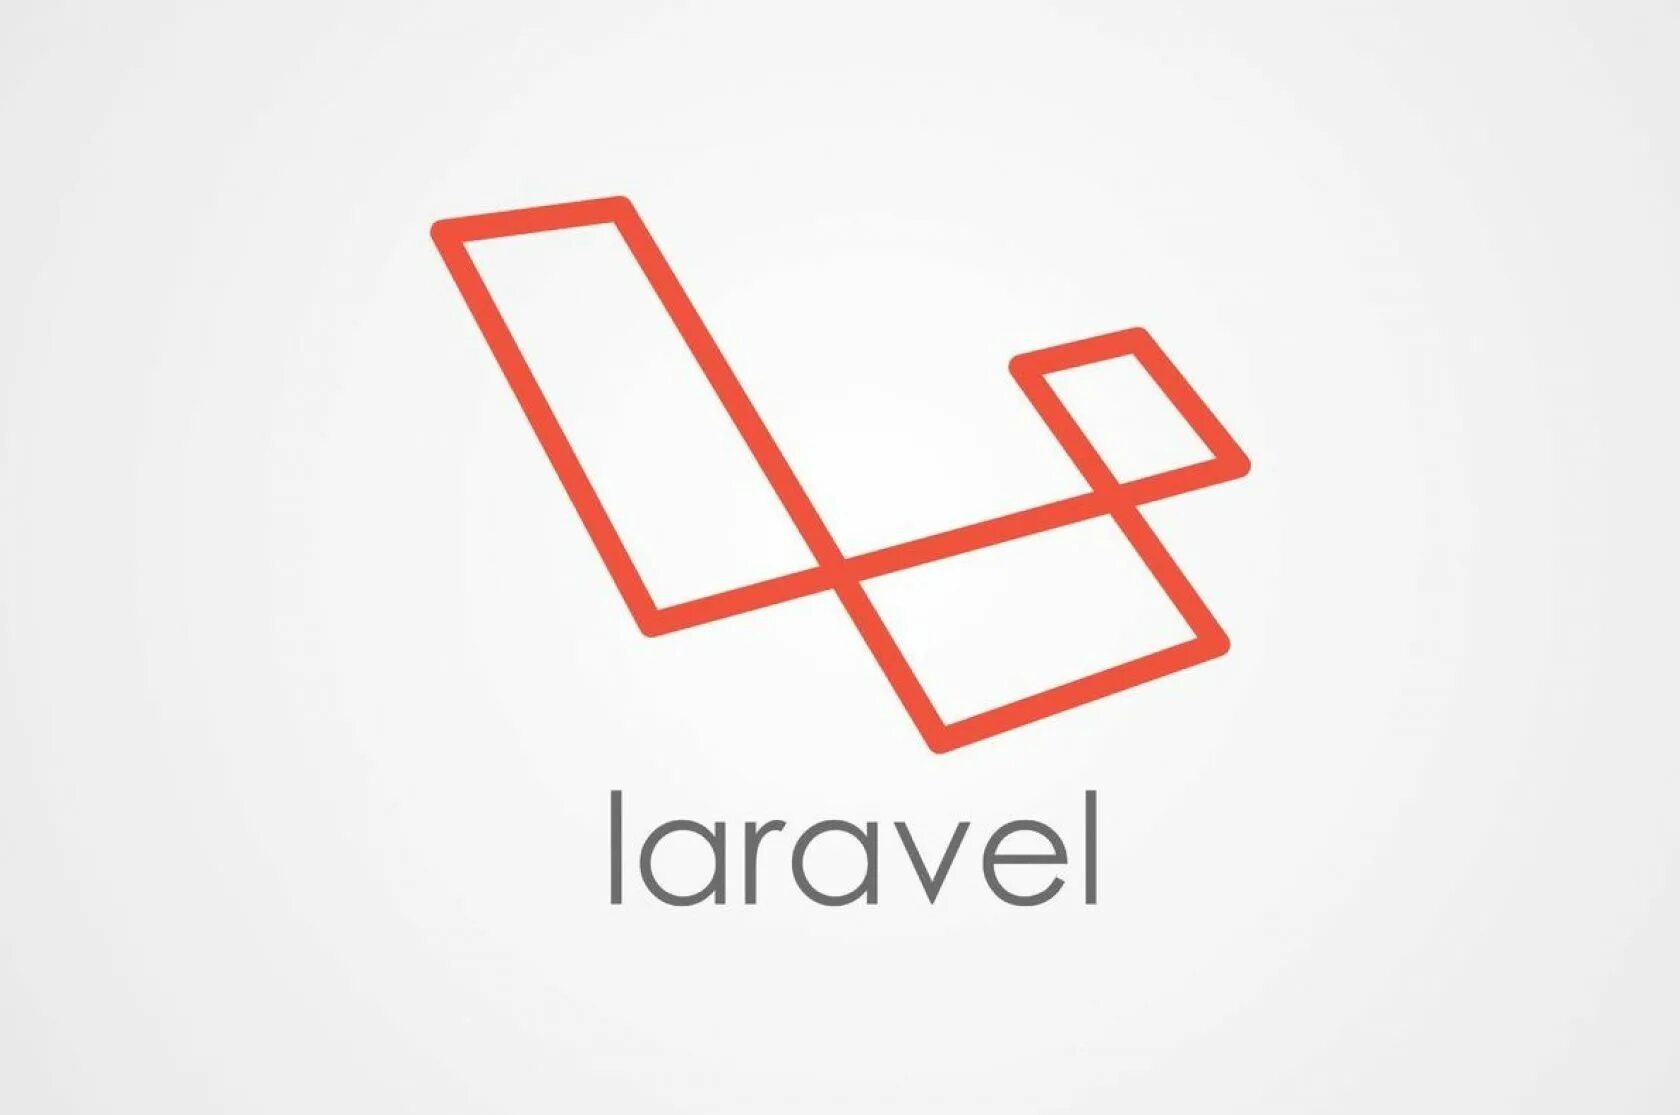 Add laravel. Ларавел. Разработчик Laravel. Laravel Framework. Linra vel.